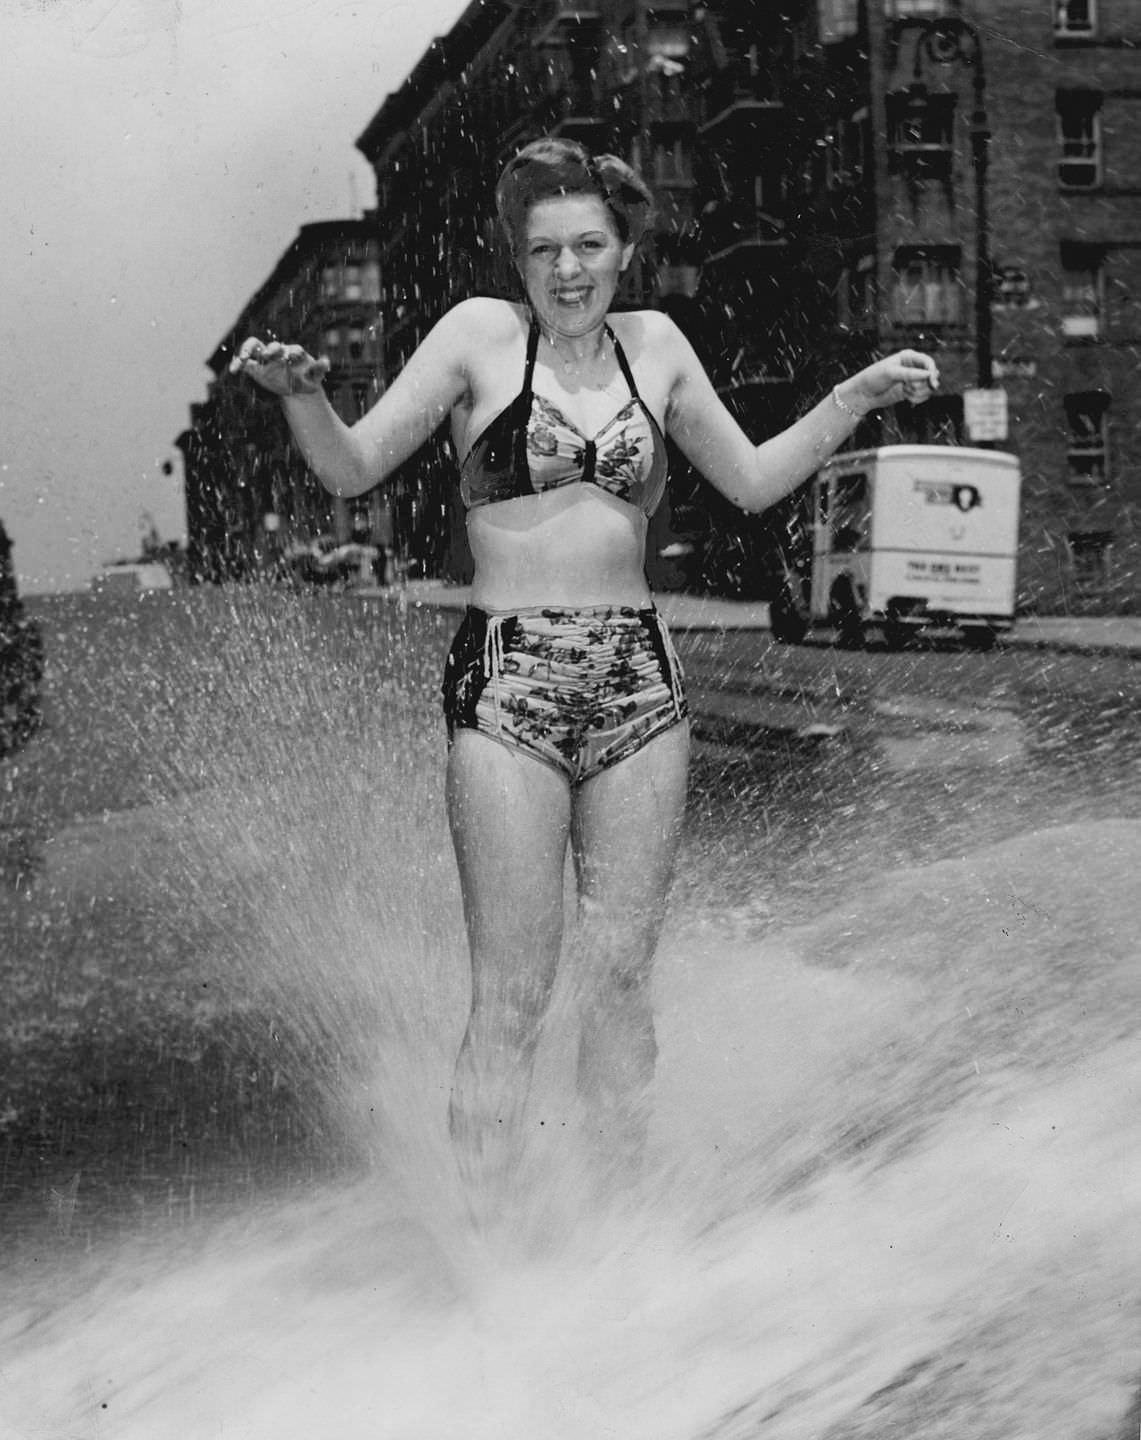 Keeping Cool, 1945.